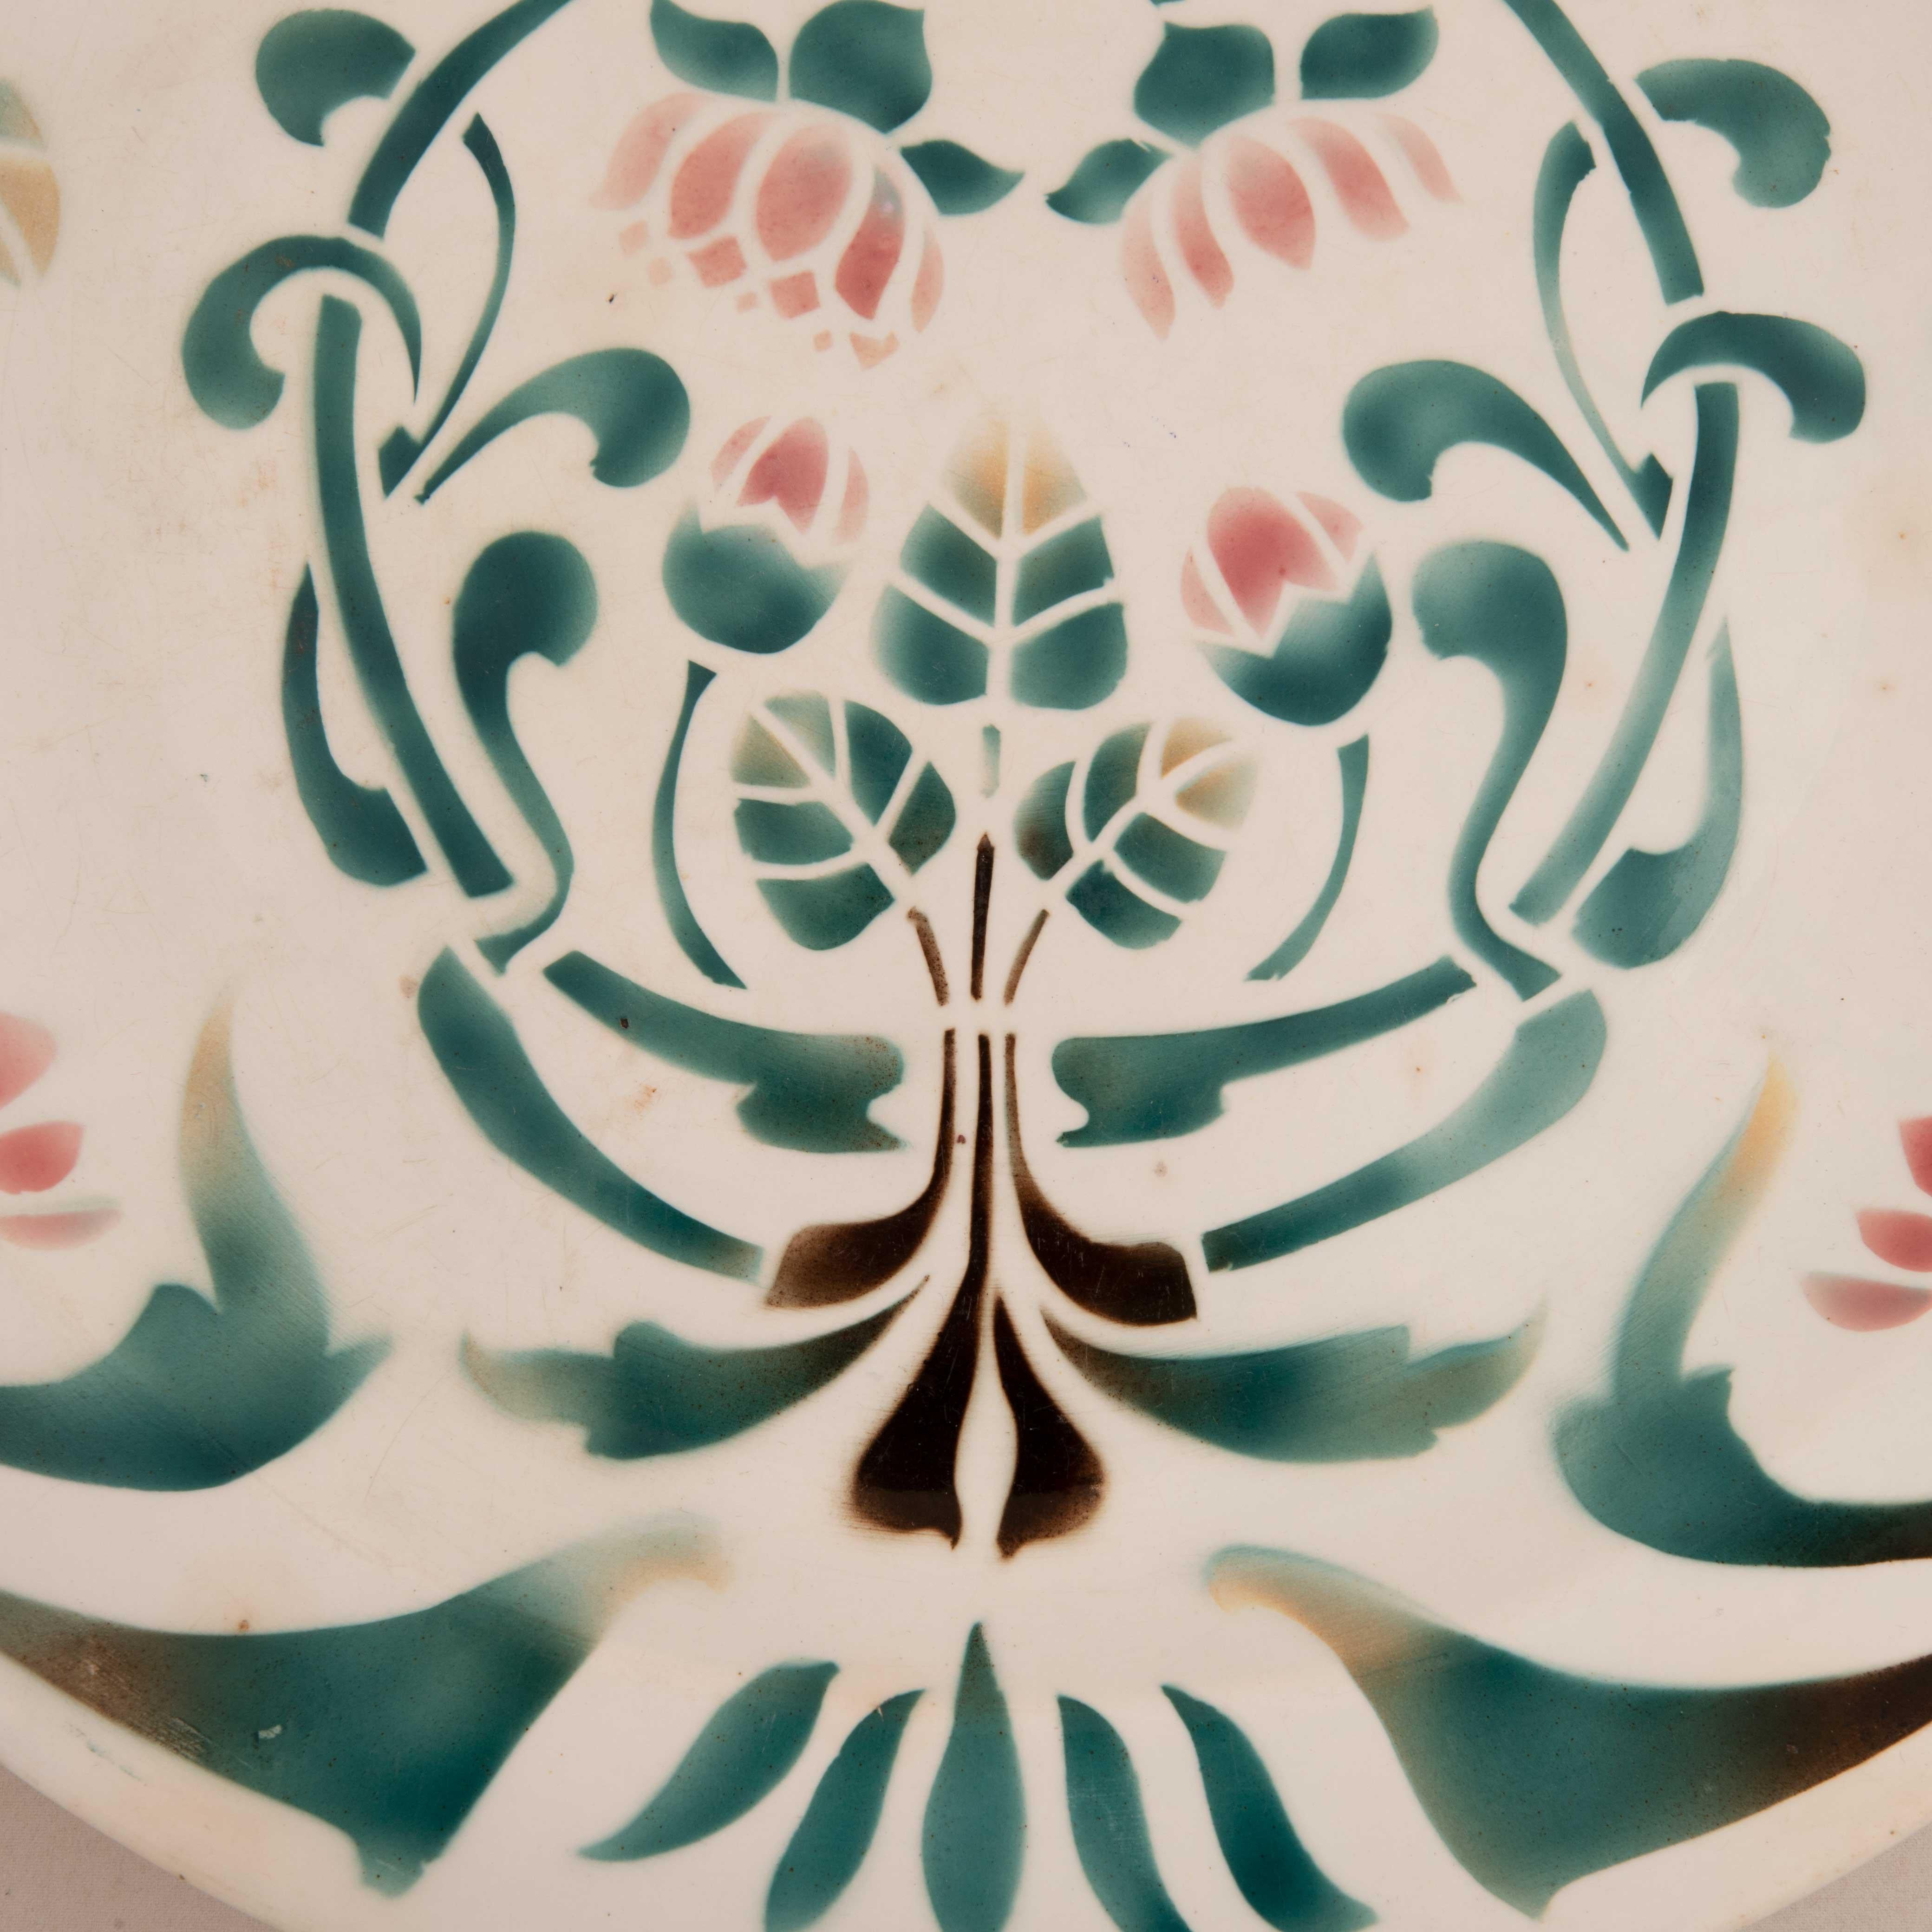 Russian Kuznetsov Ceramic Plate, Russia, Early 20th Century For Sale